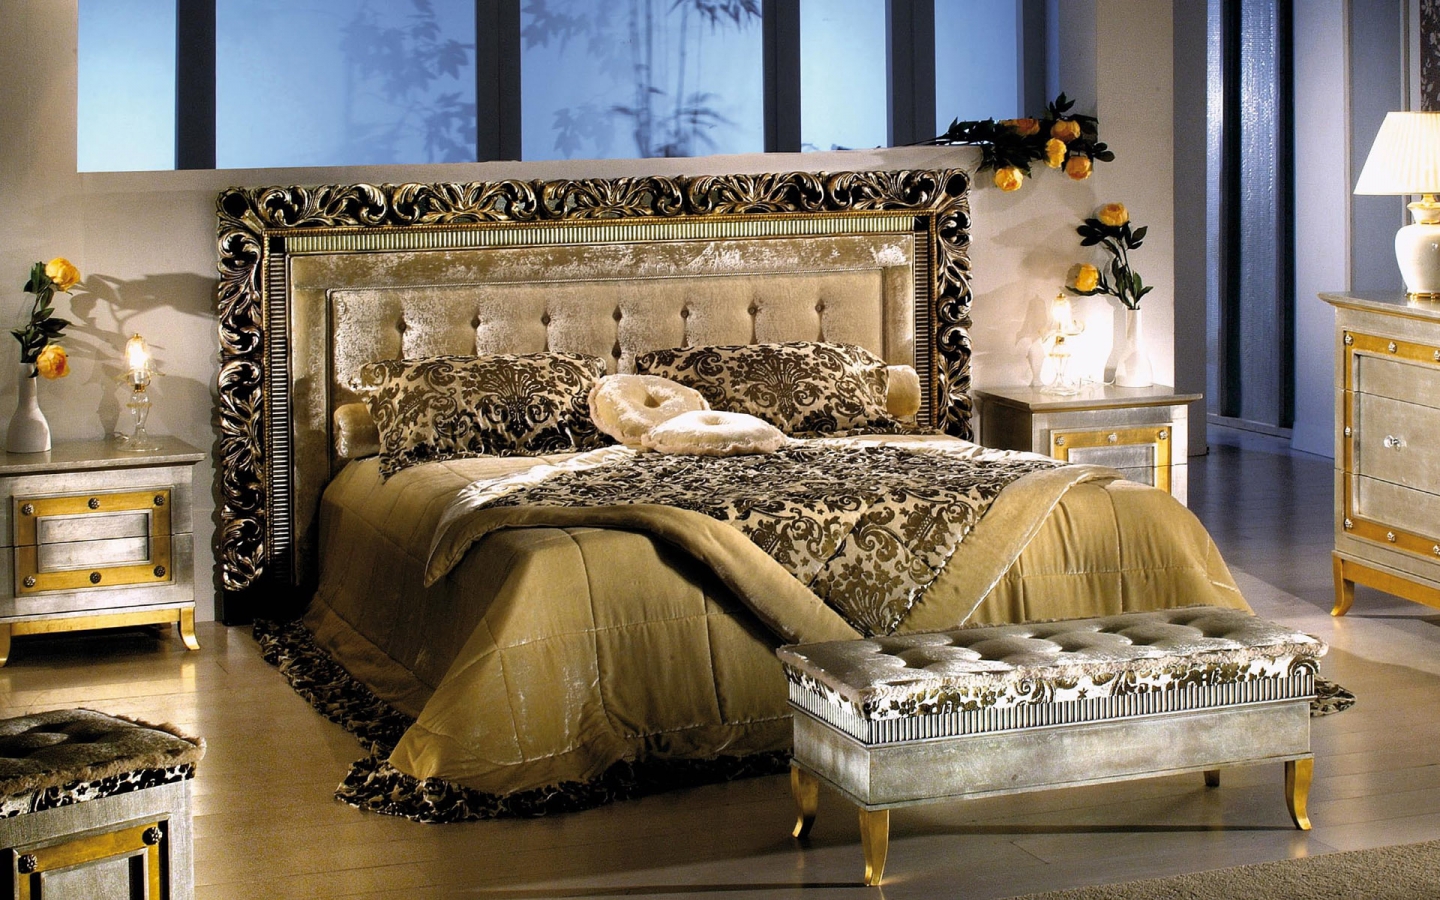 Bedroom in velvet for 1440 x 900 widescreen resolution